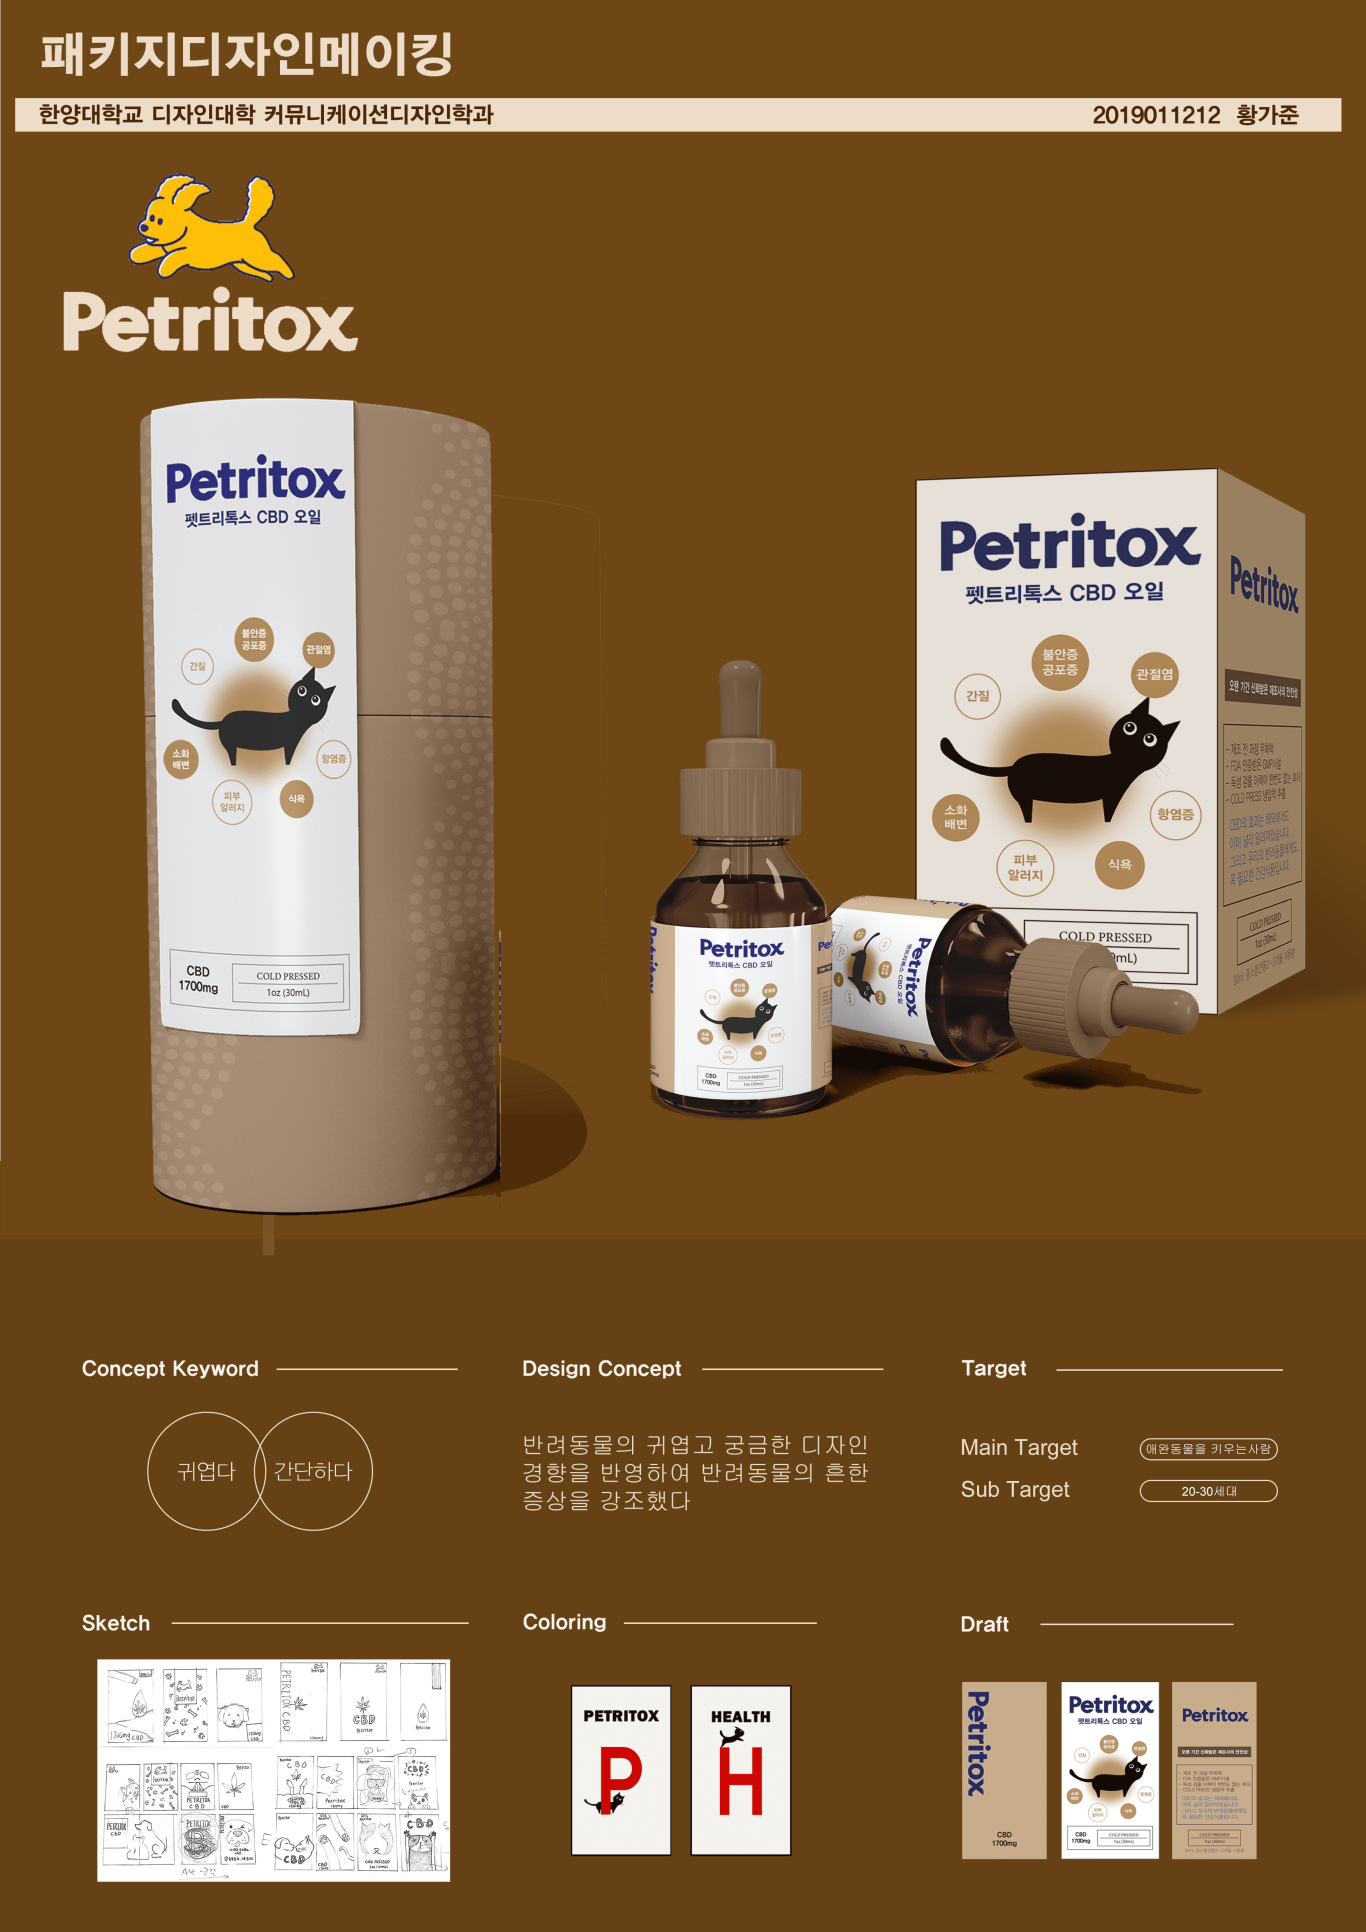 Petritox品牌包裝設計圖0